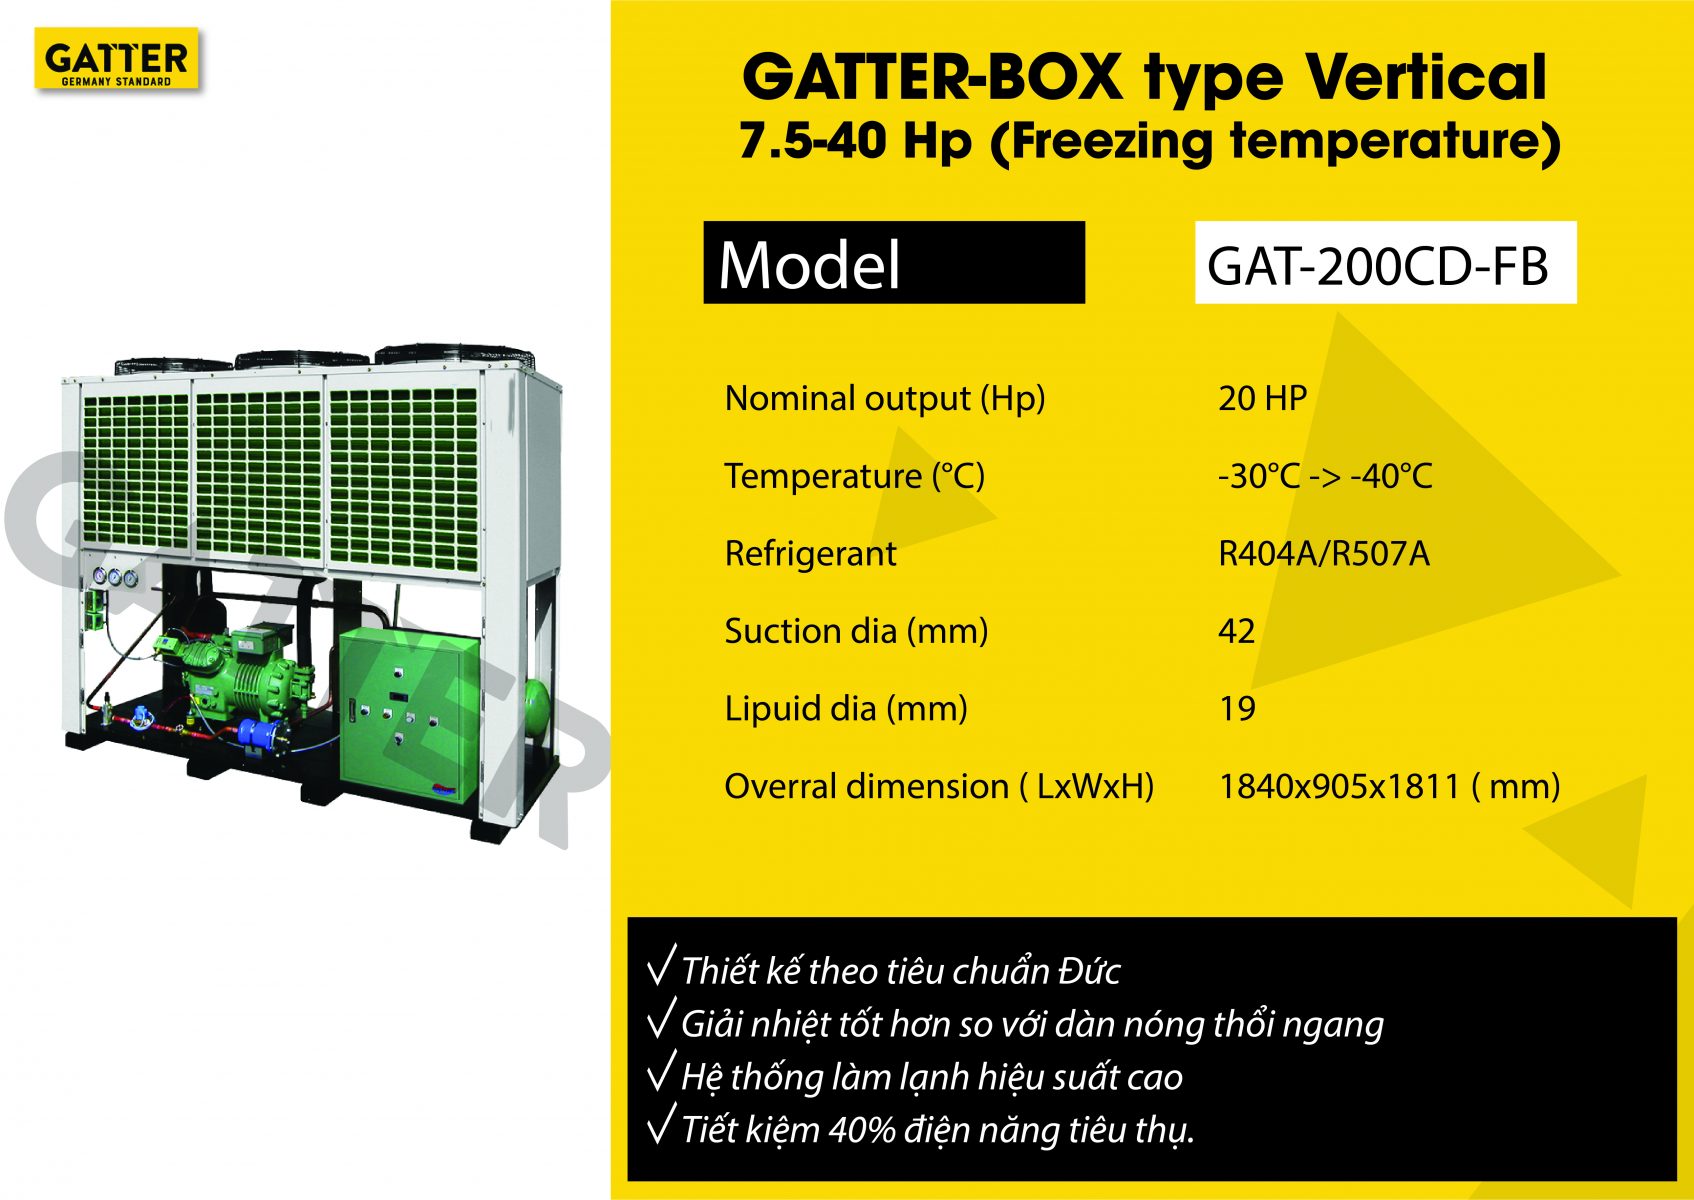 Cụm Gatter-box GAT-200CD-FB